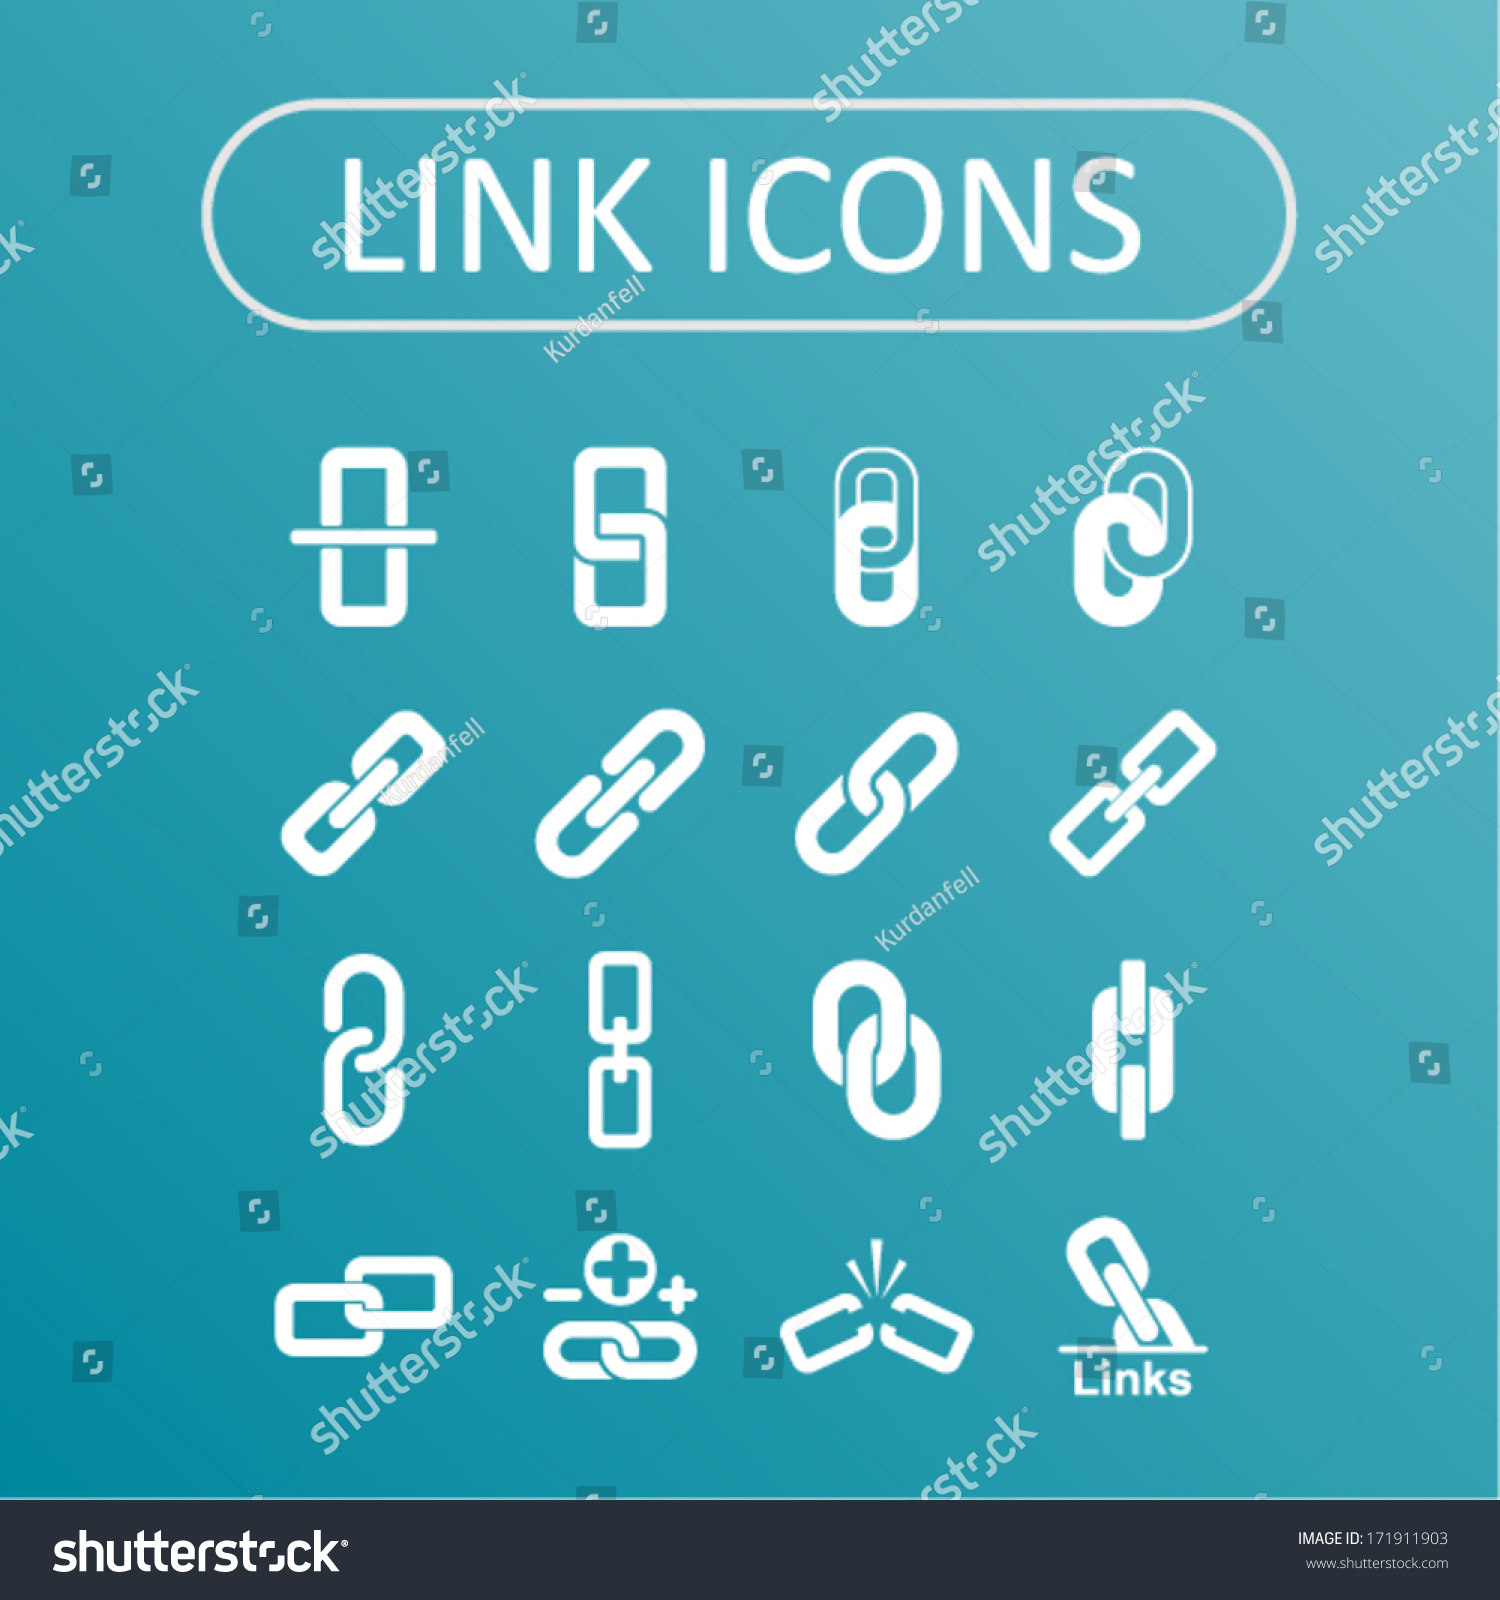 Link Icons For Web Ilustración vectorial en stock 171911903 : Shutterstock